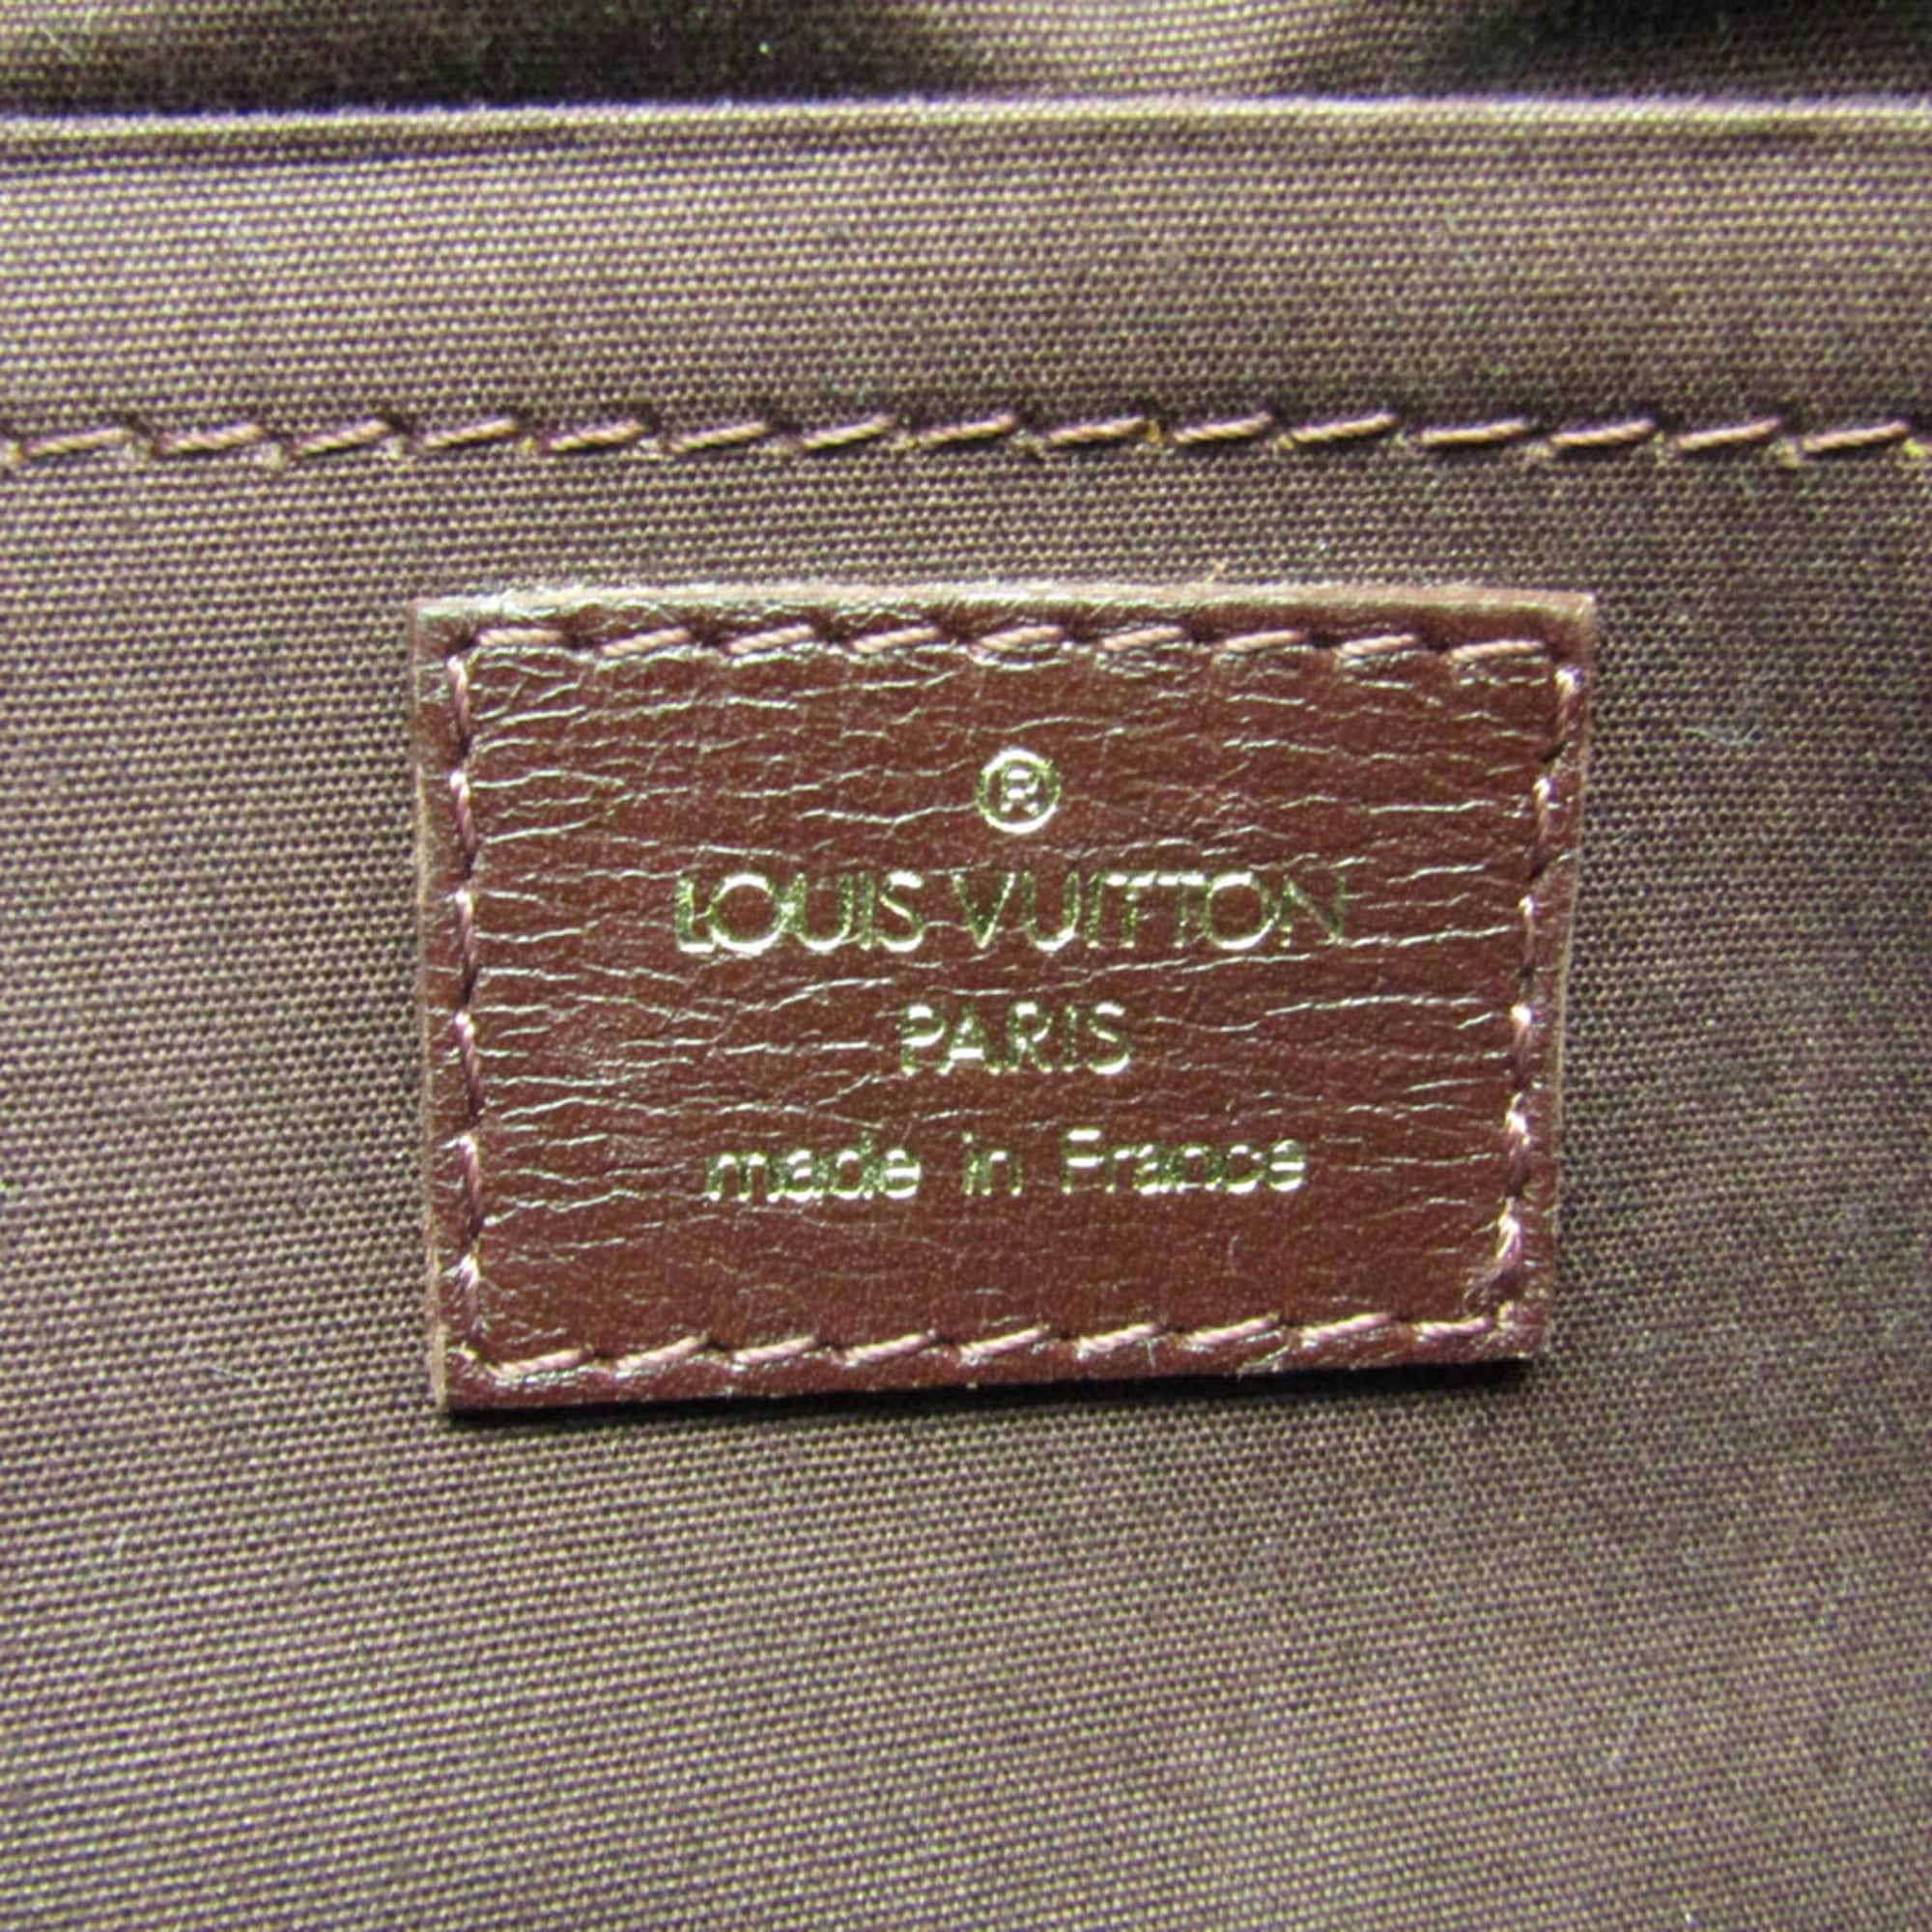 LOUIS VUITTON Rhapsody Monogram Canvas Shoulder Bag Light Grey - 25% O